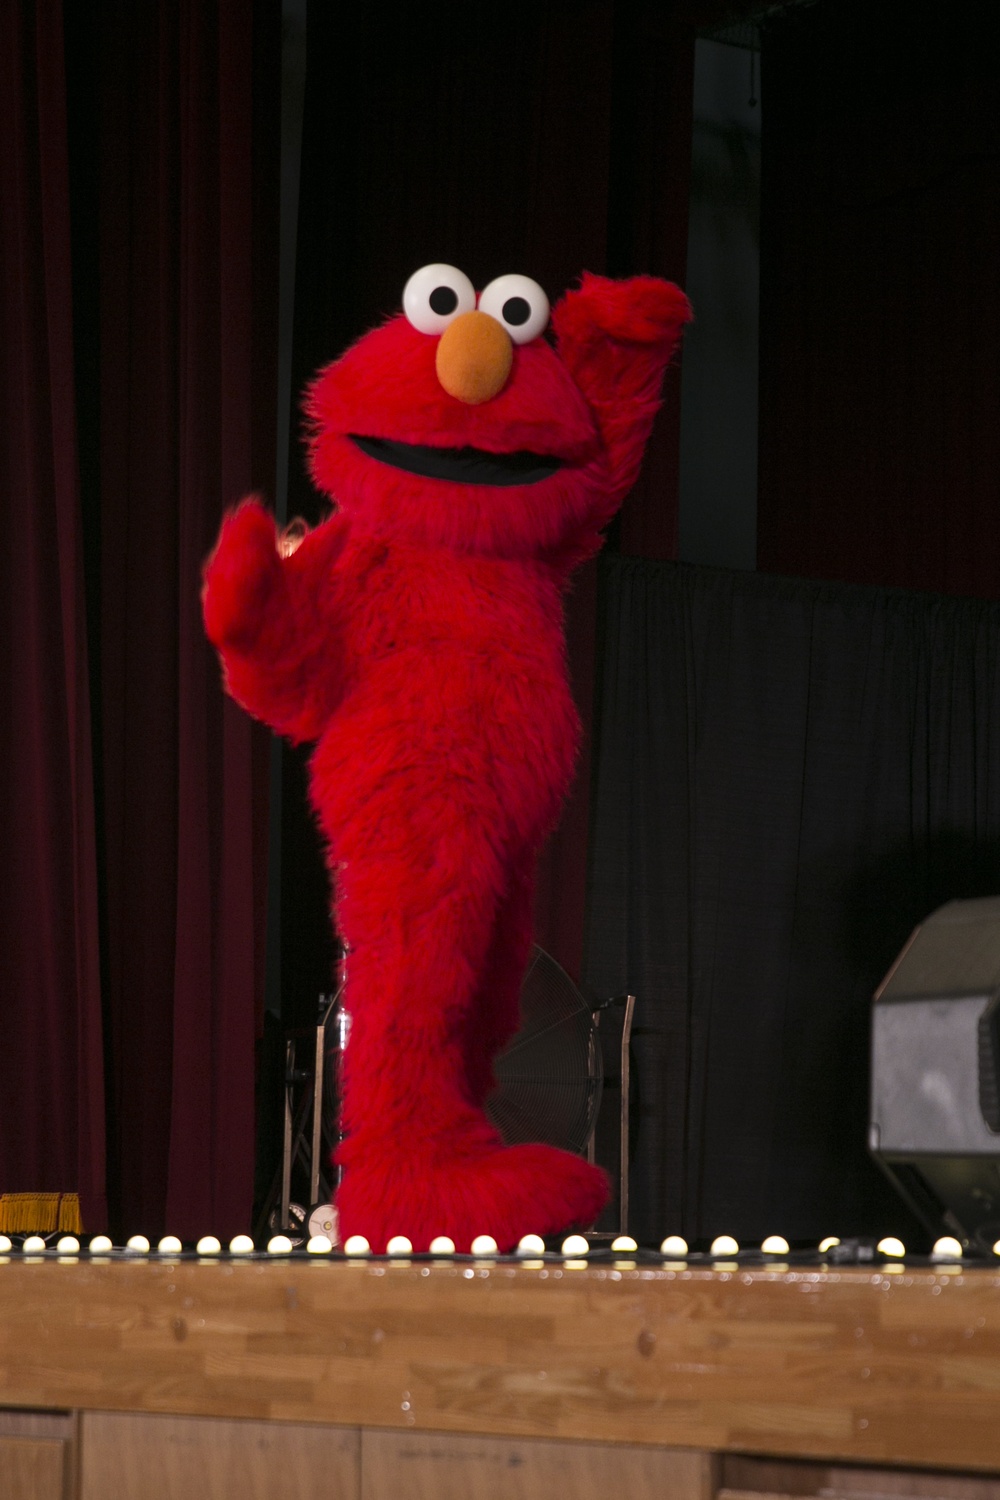 Sesame Street, USO host transition show